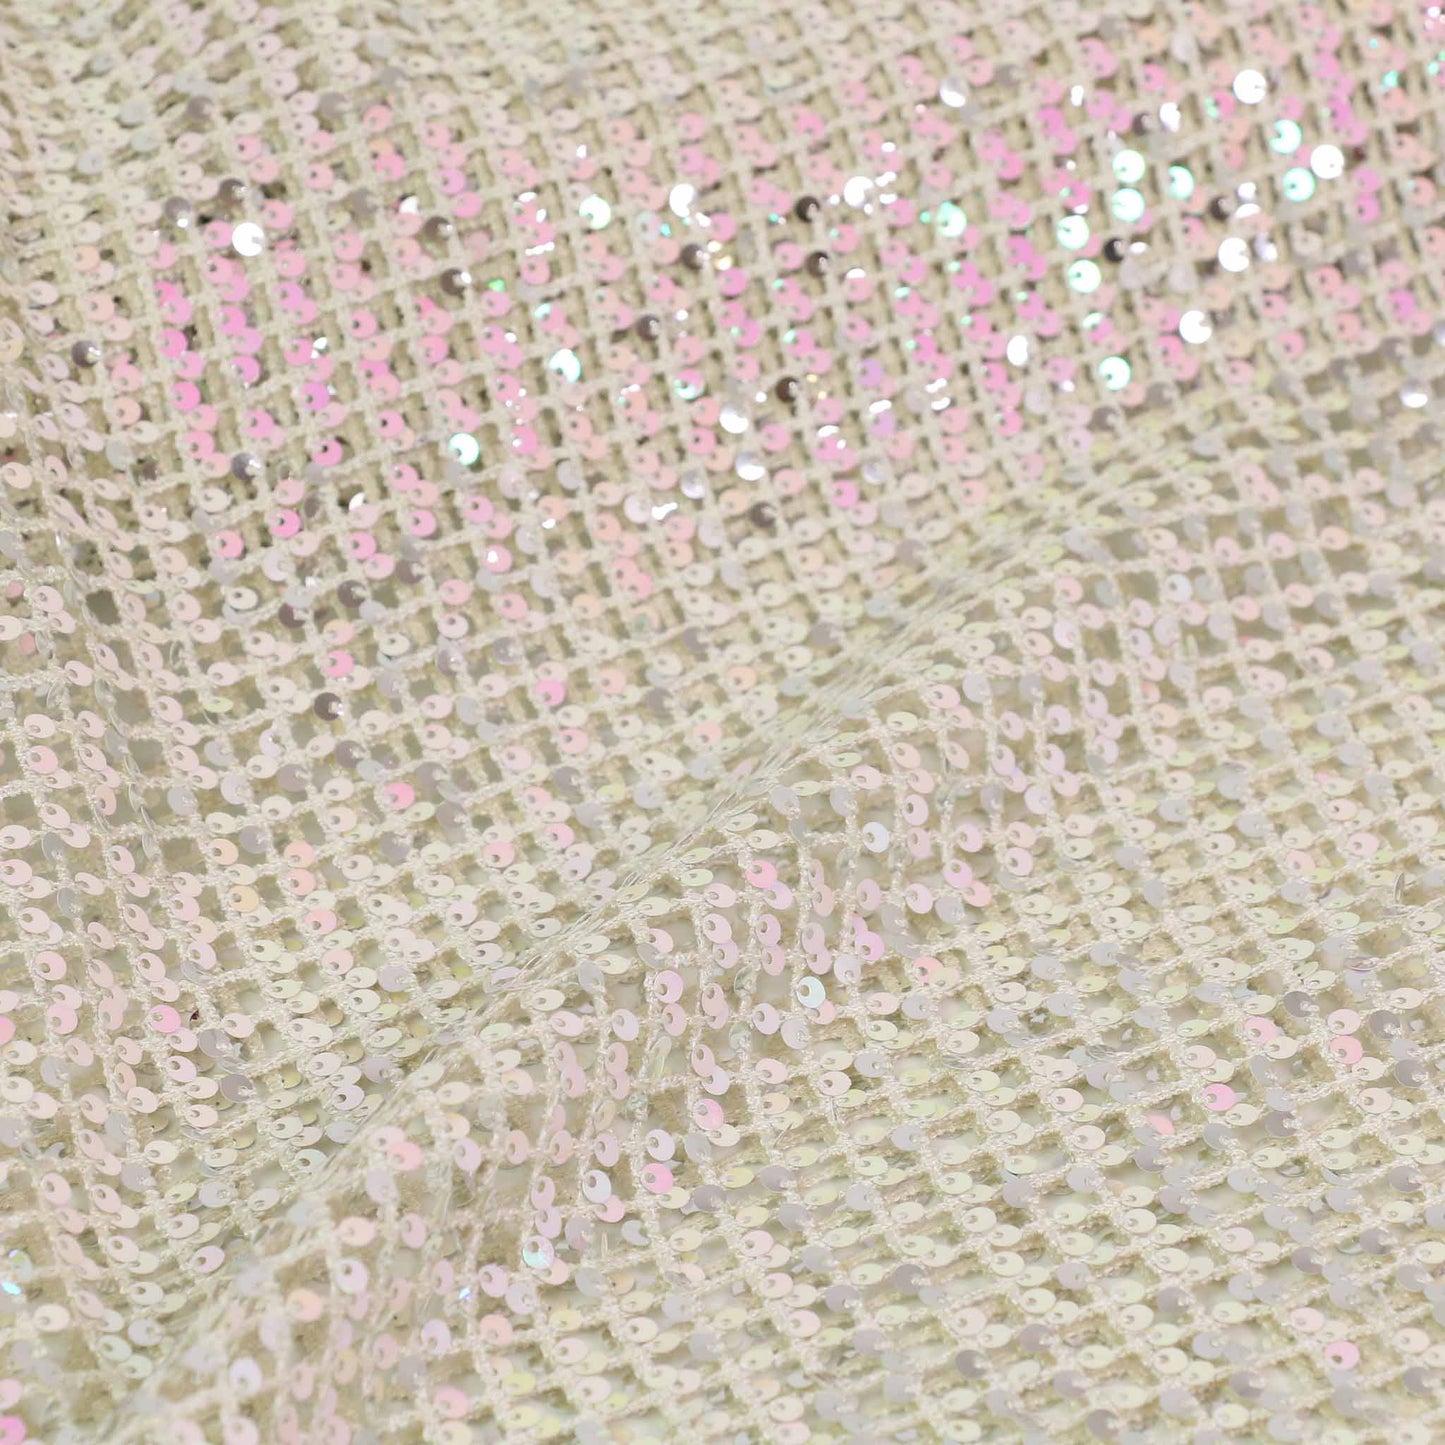 Fishnet Sequin Fabric - White, Iridescent